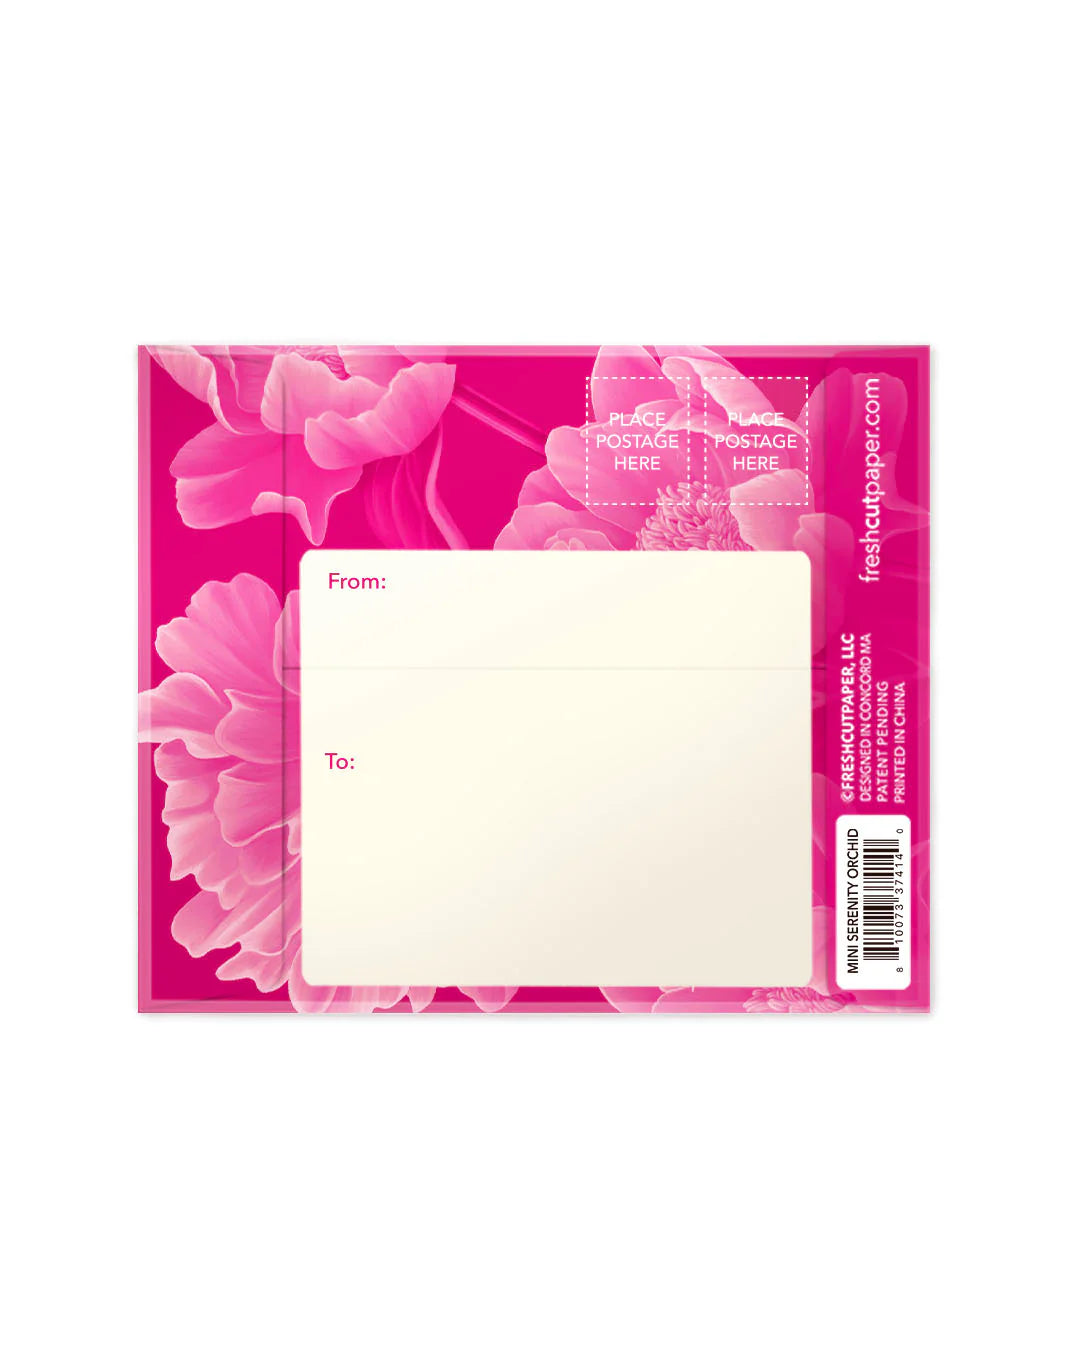 back view of pink mailing envelope.